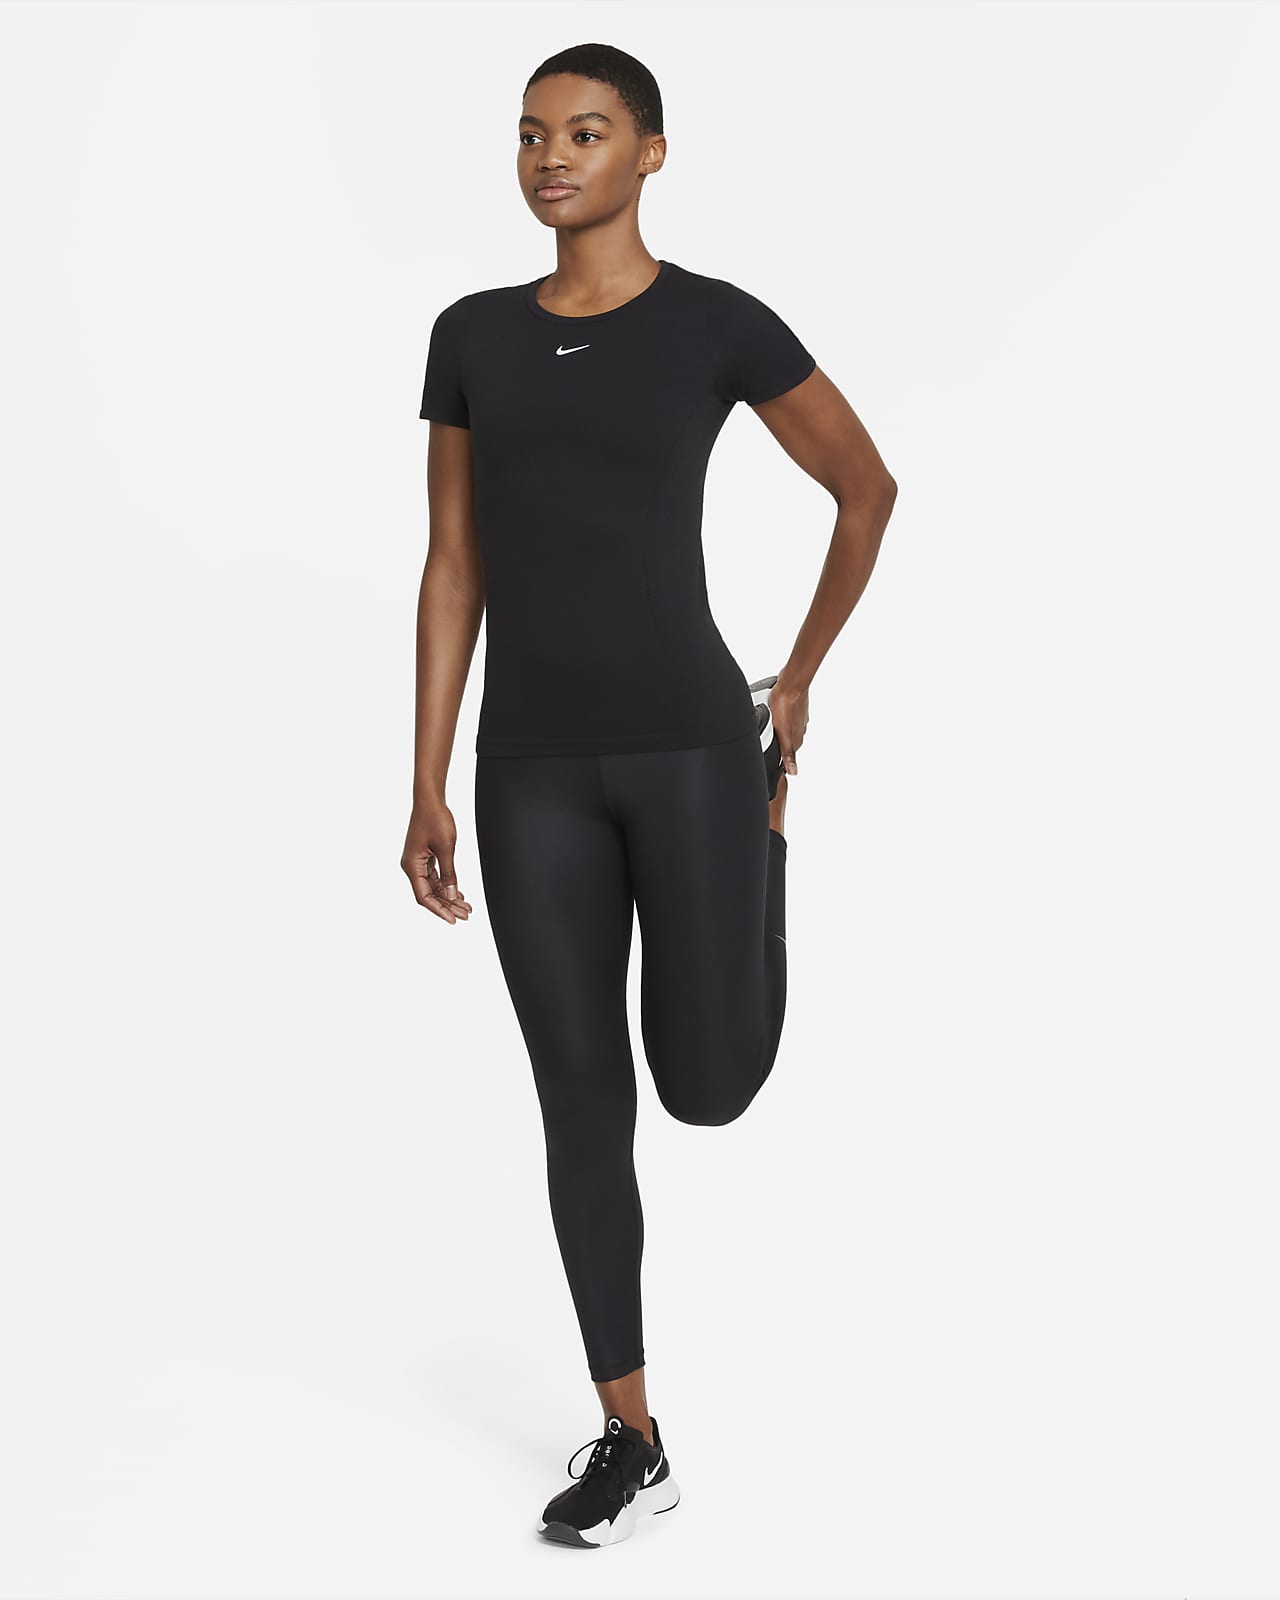 Women\'s Dri-FIT Slim-Fit Aura Nike Top. ADV Short-Sleeve LU Nike